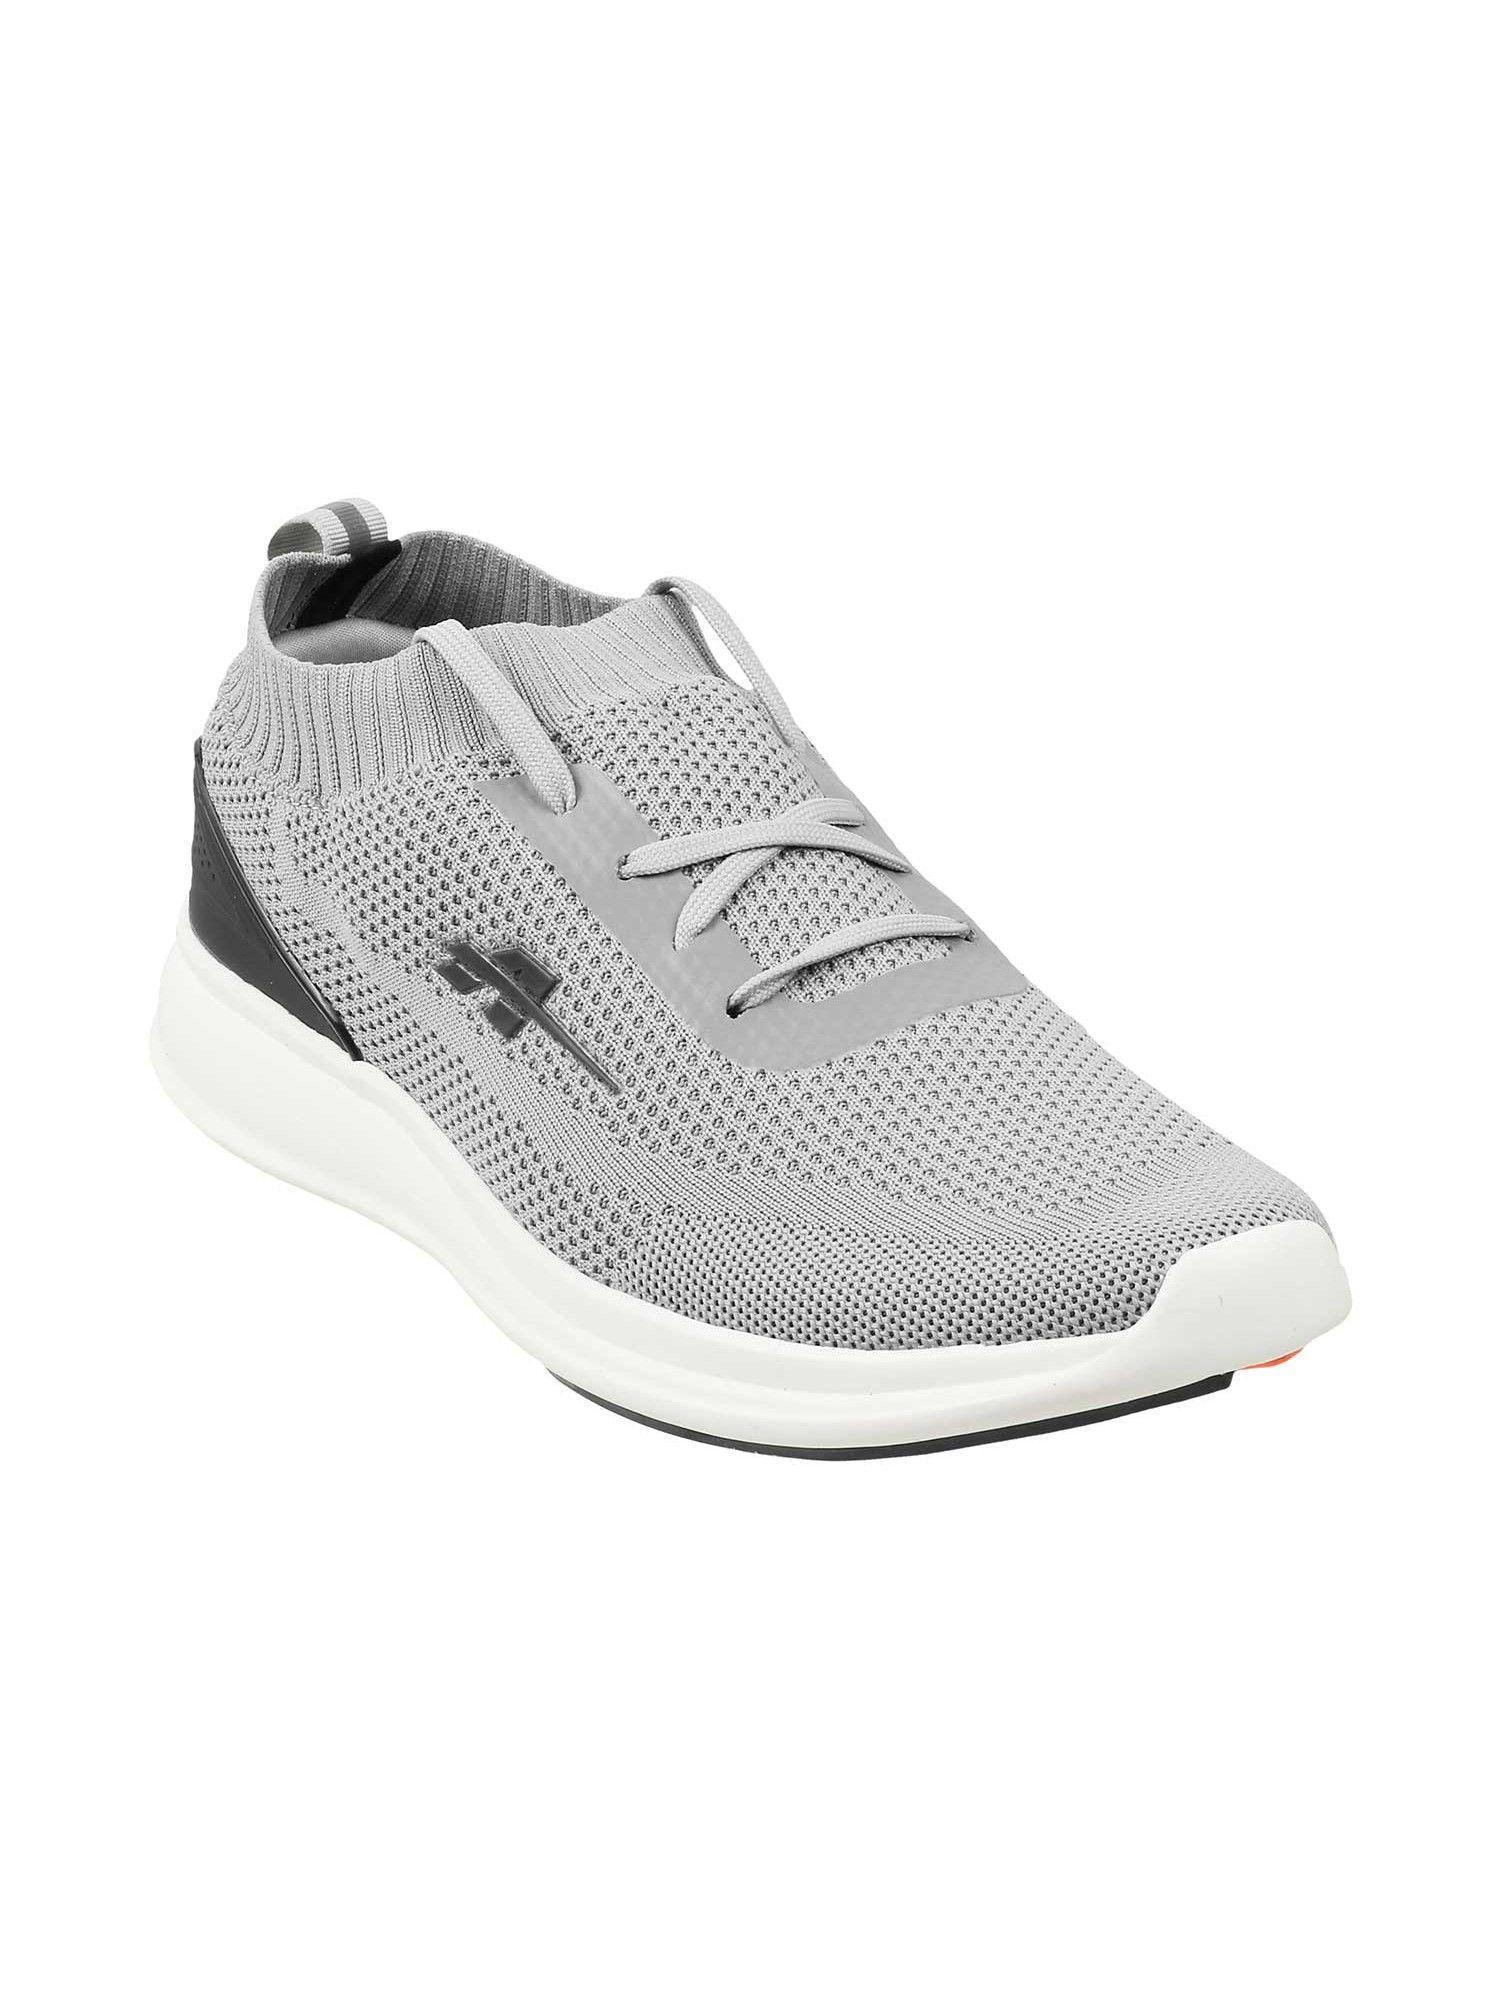 woven-grey-sneakers